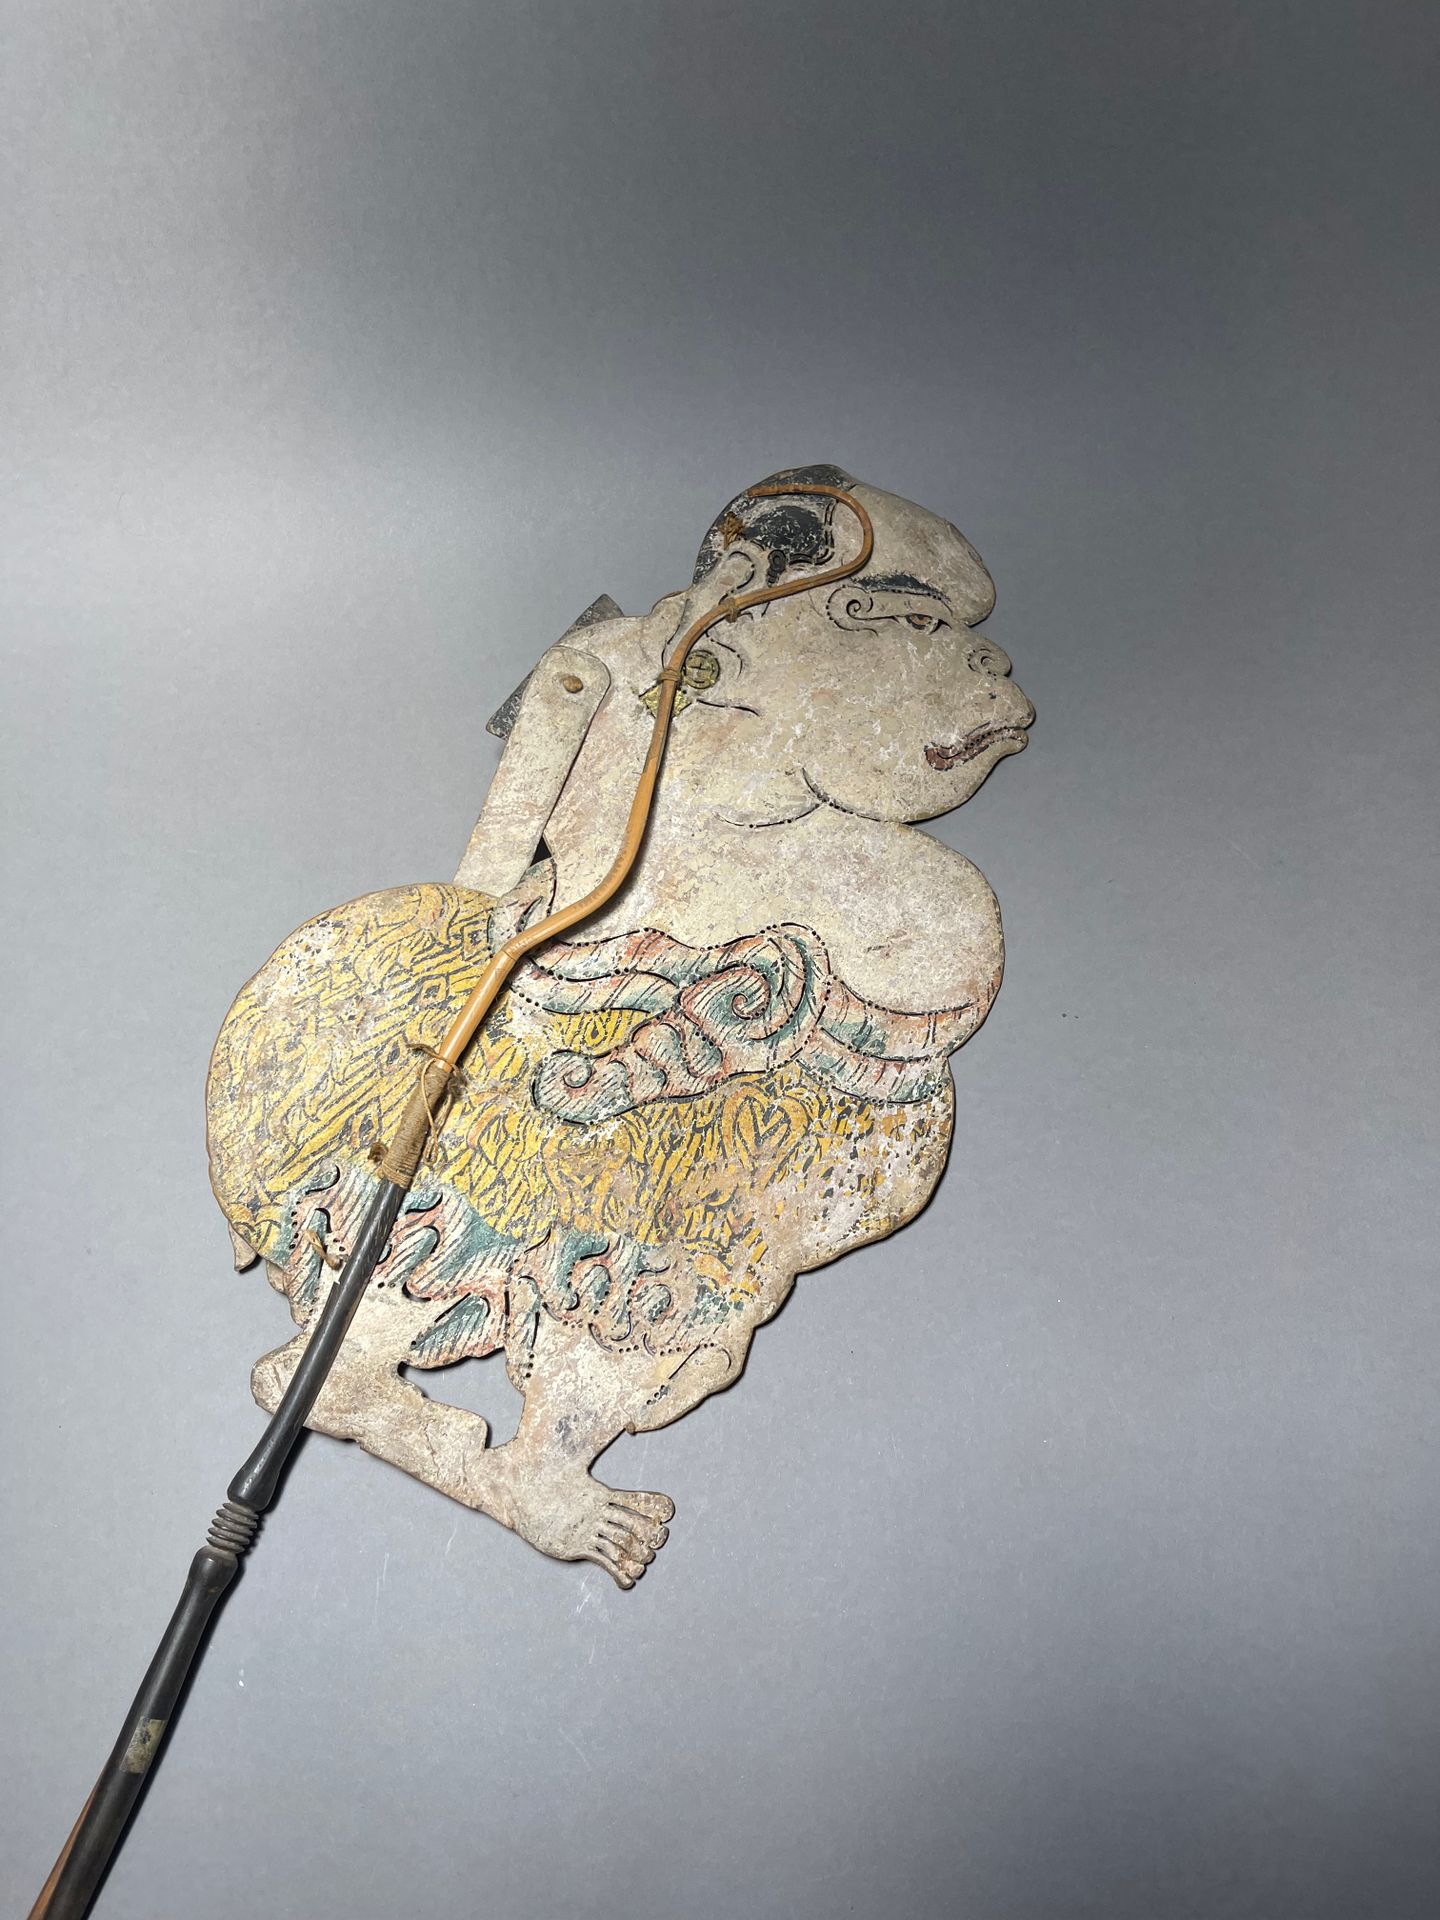 INDONESIE - XXe siècle 多色皮革的Wayang kulit（皮影戏）木偶。高38.5厘米，不含杆件